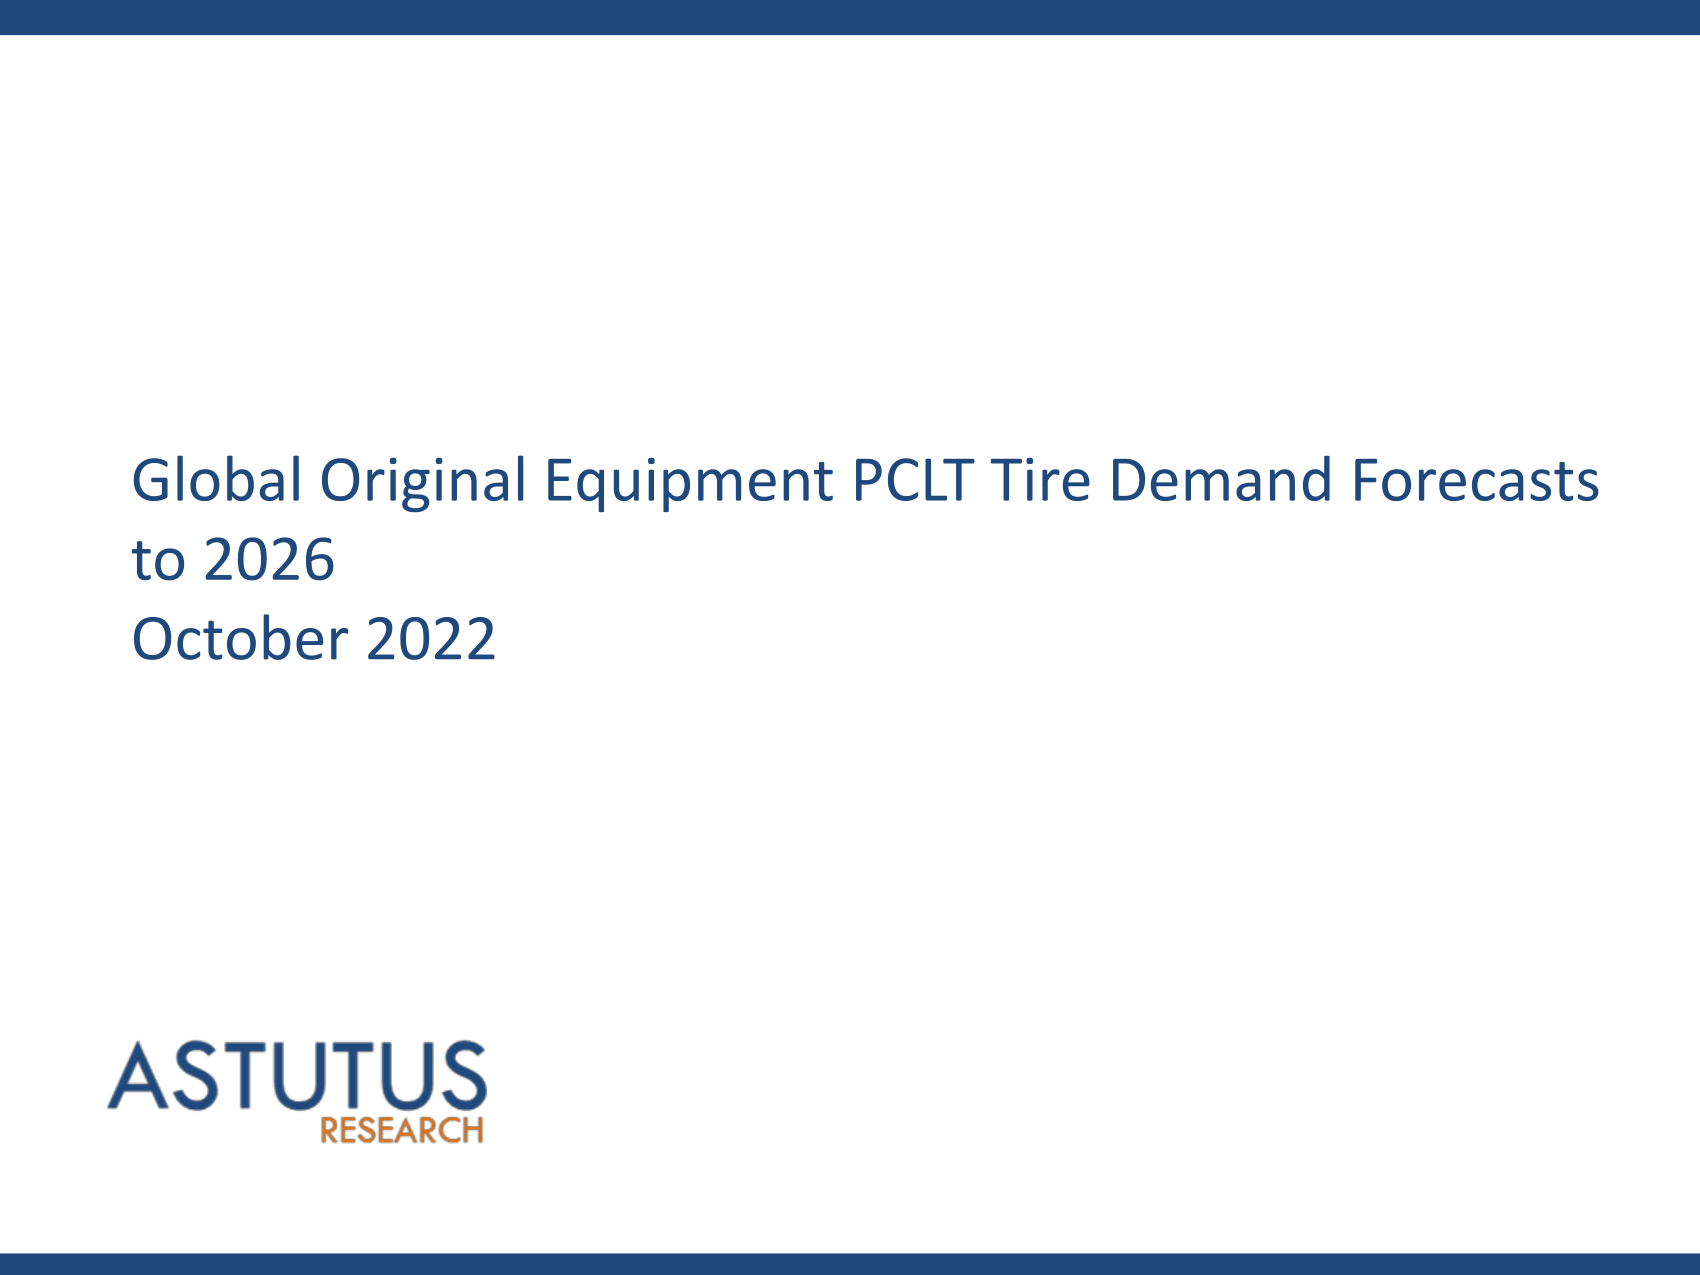 Global Original Equipment PCLT Tire Market Forecasts to 2026